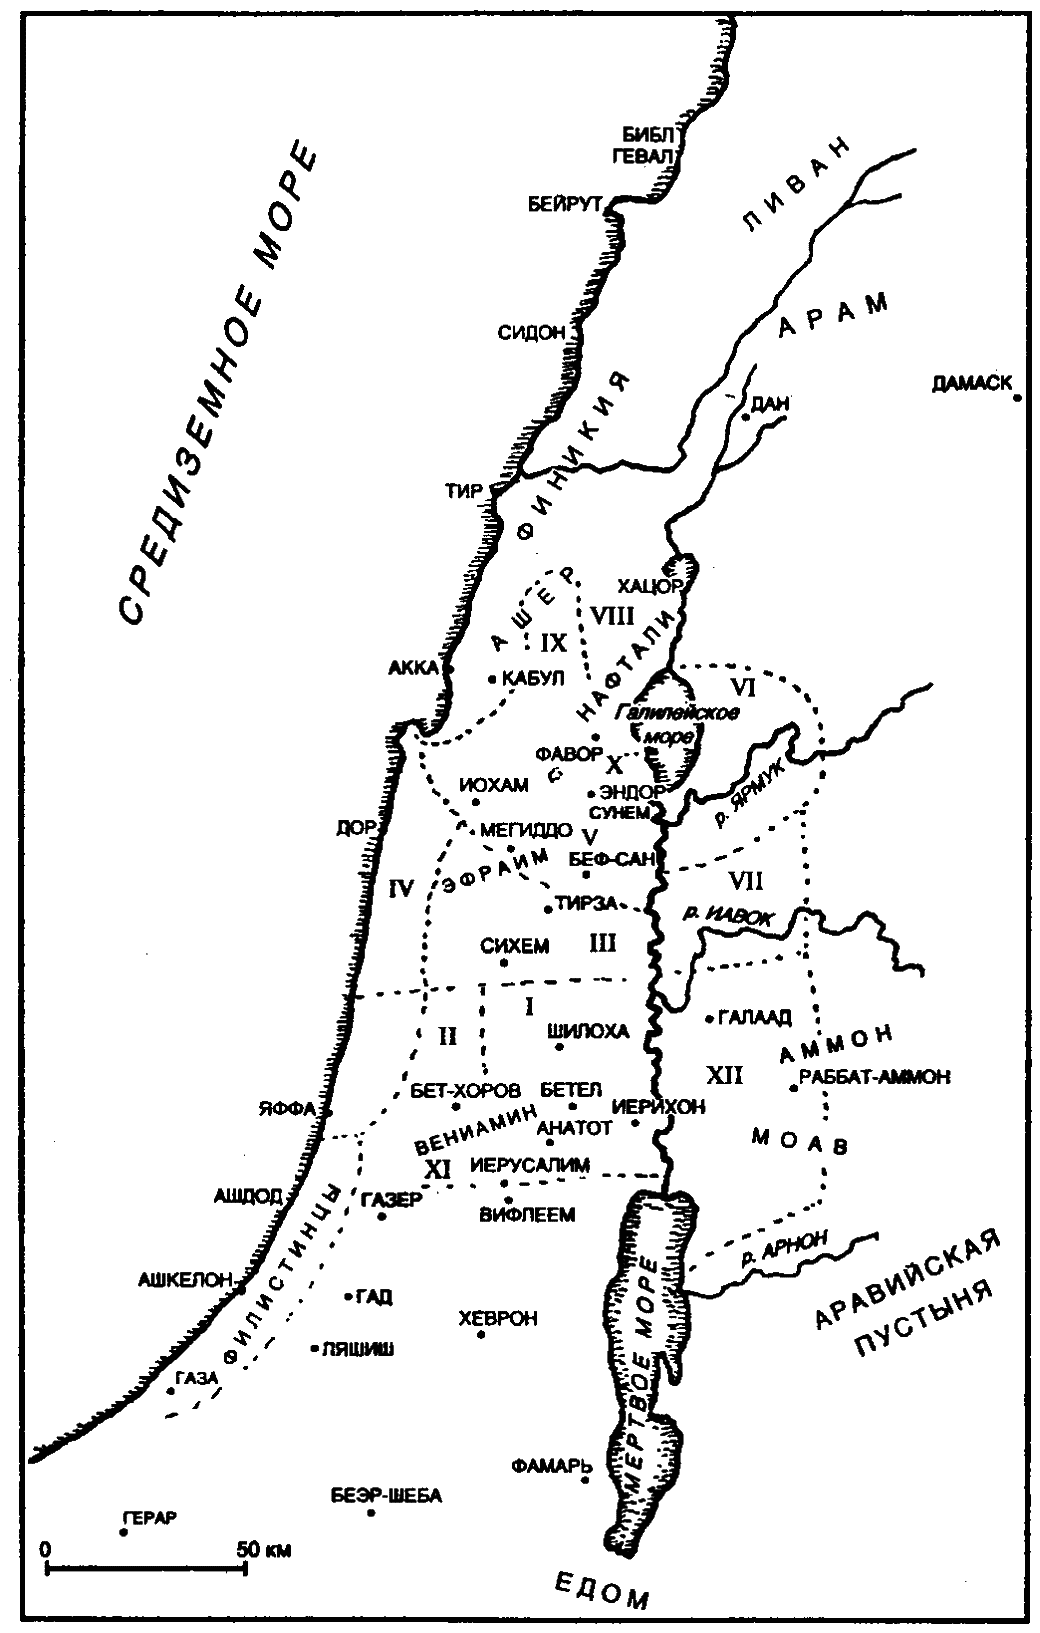 Где находится библ сидон и тир. Карта Палестины времен Христа. Тир и Сидон Палестина на карте. Генисаретская земля во времена Иисуса.